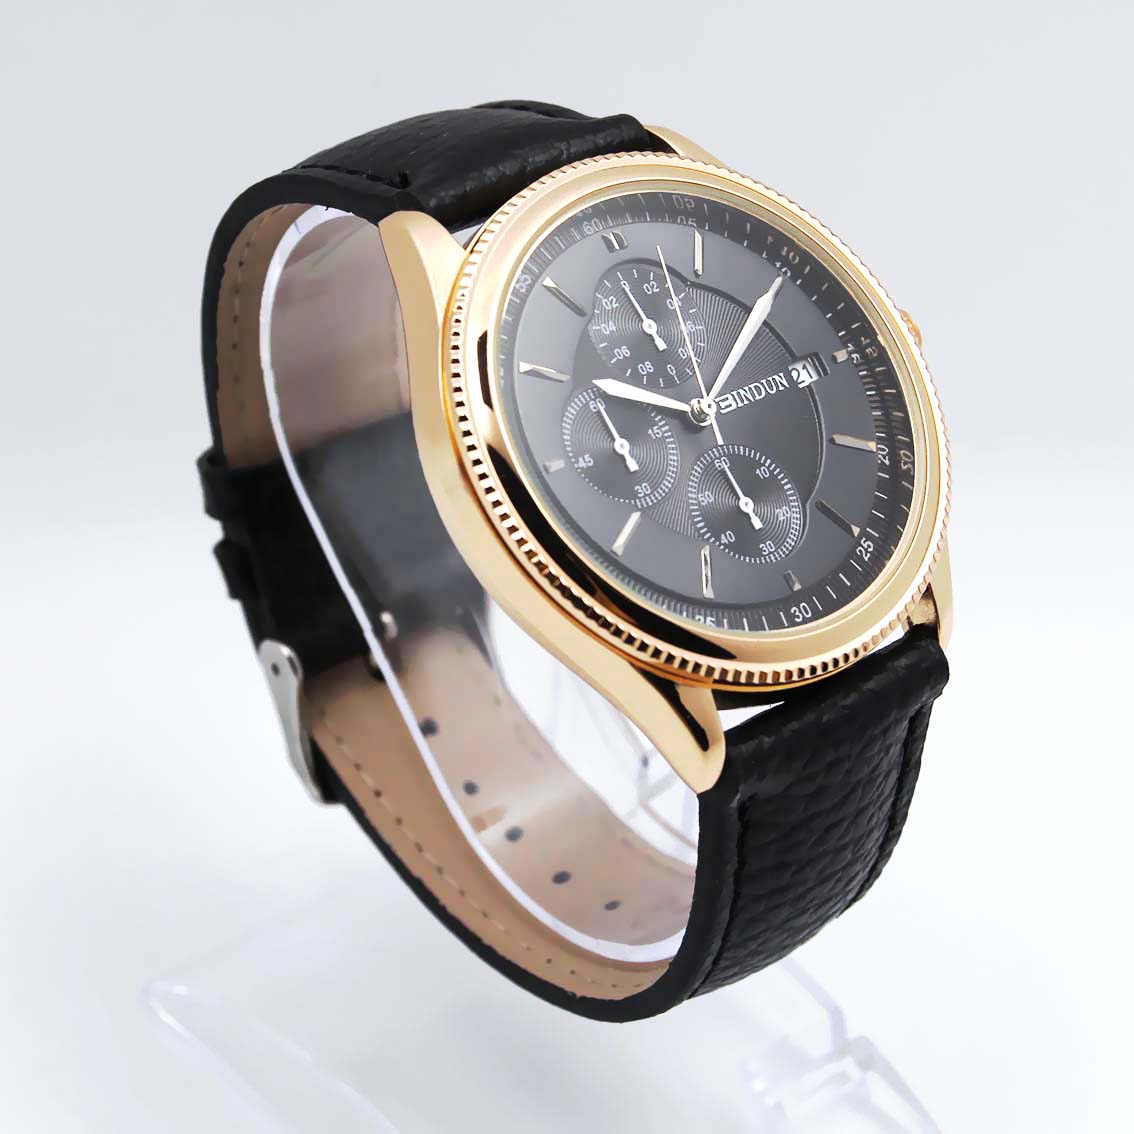 #02119Men's wristwatch quartz analog leather strap watch